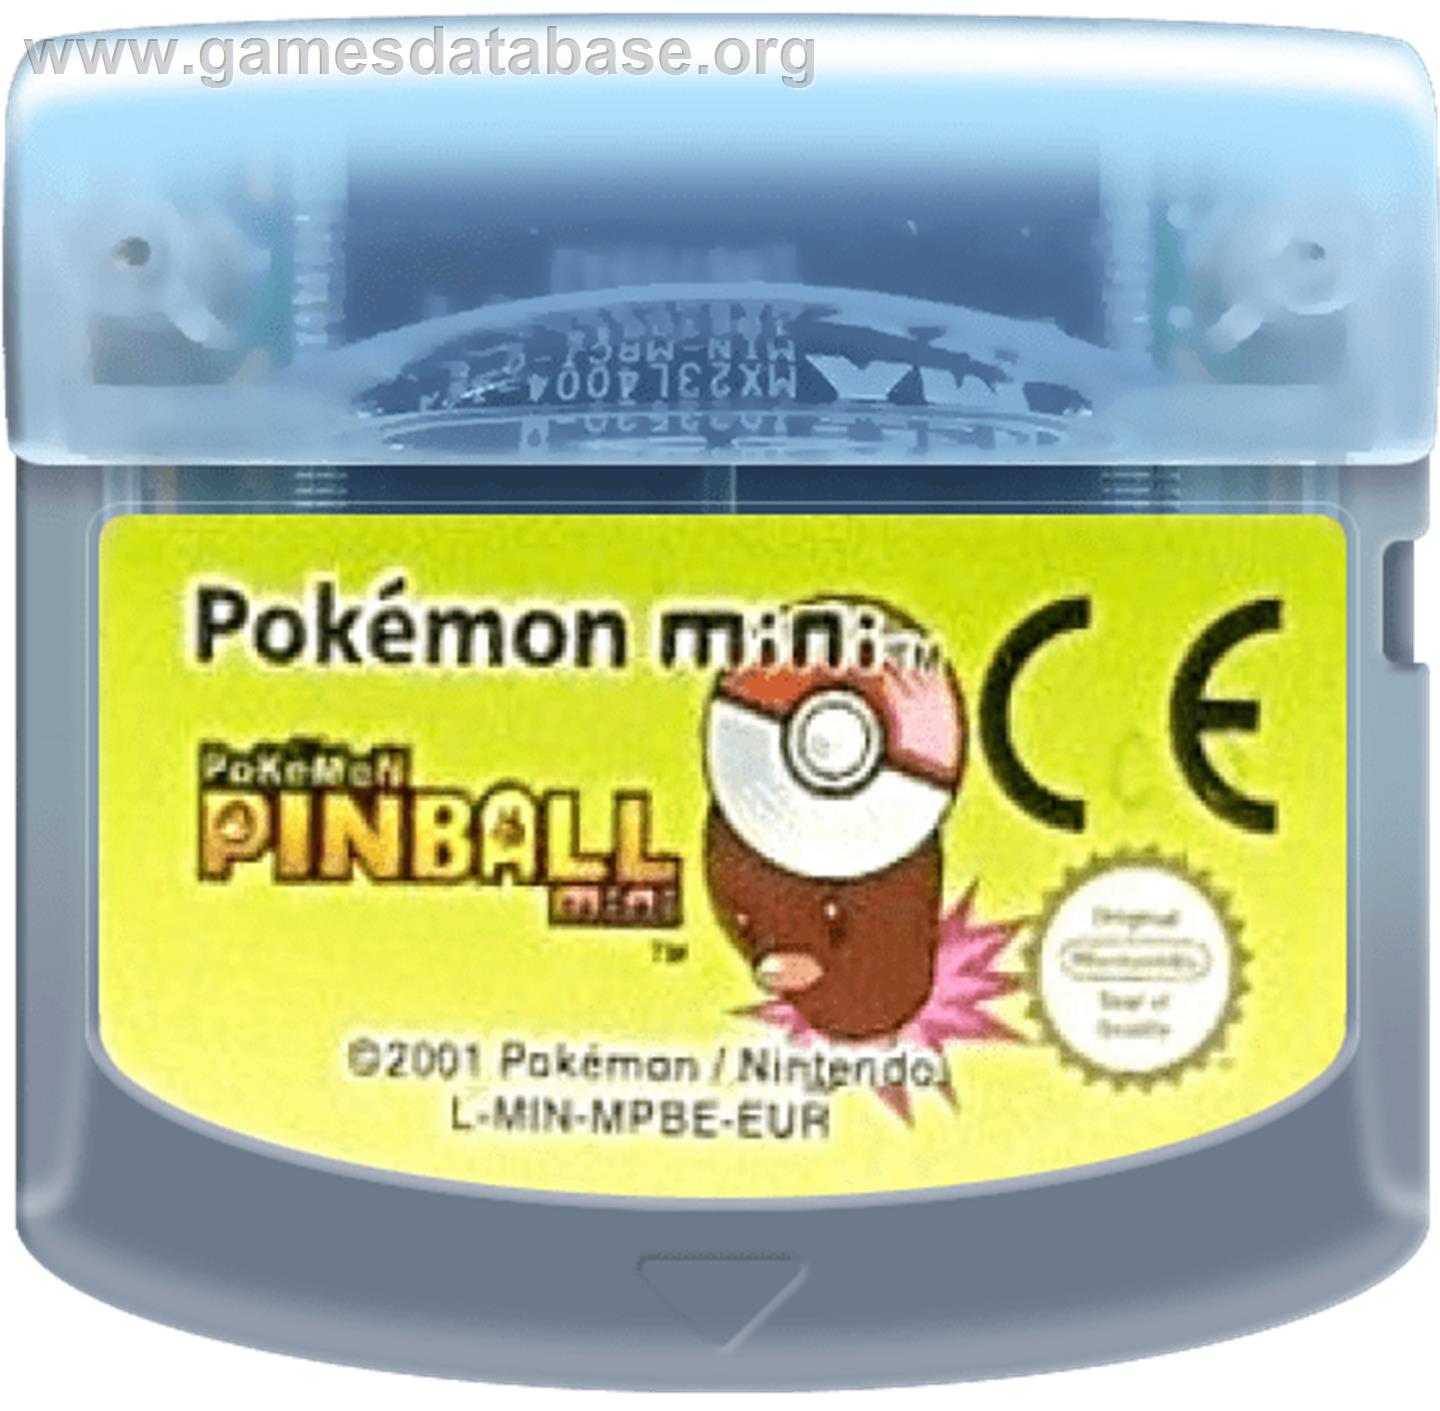 Pokemon Pinball Mini - Nintendo Pokemon Mini - Artwork - Cartridge